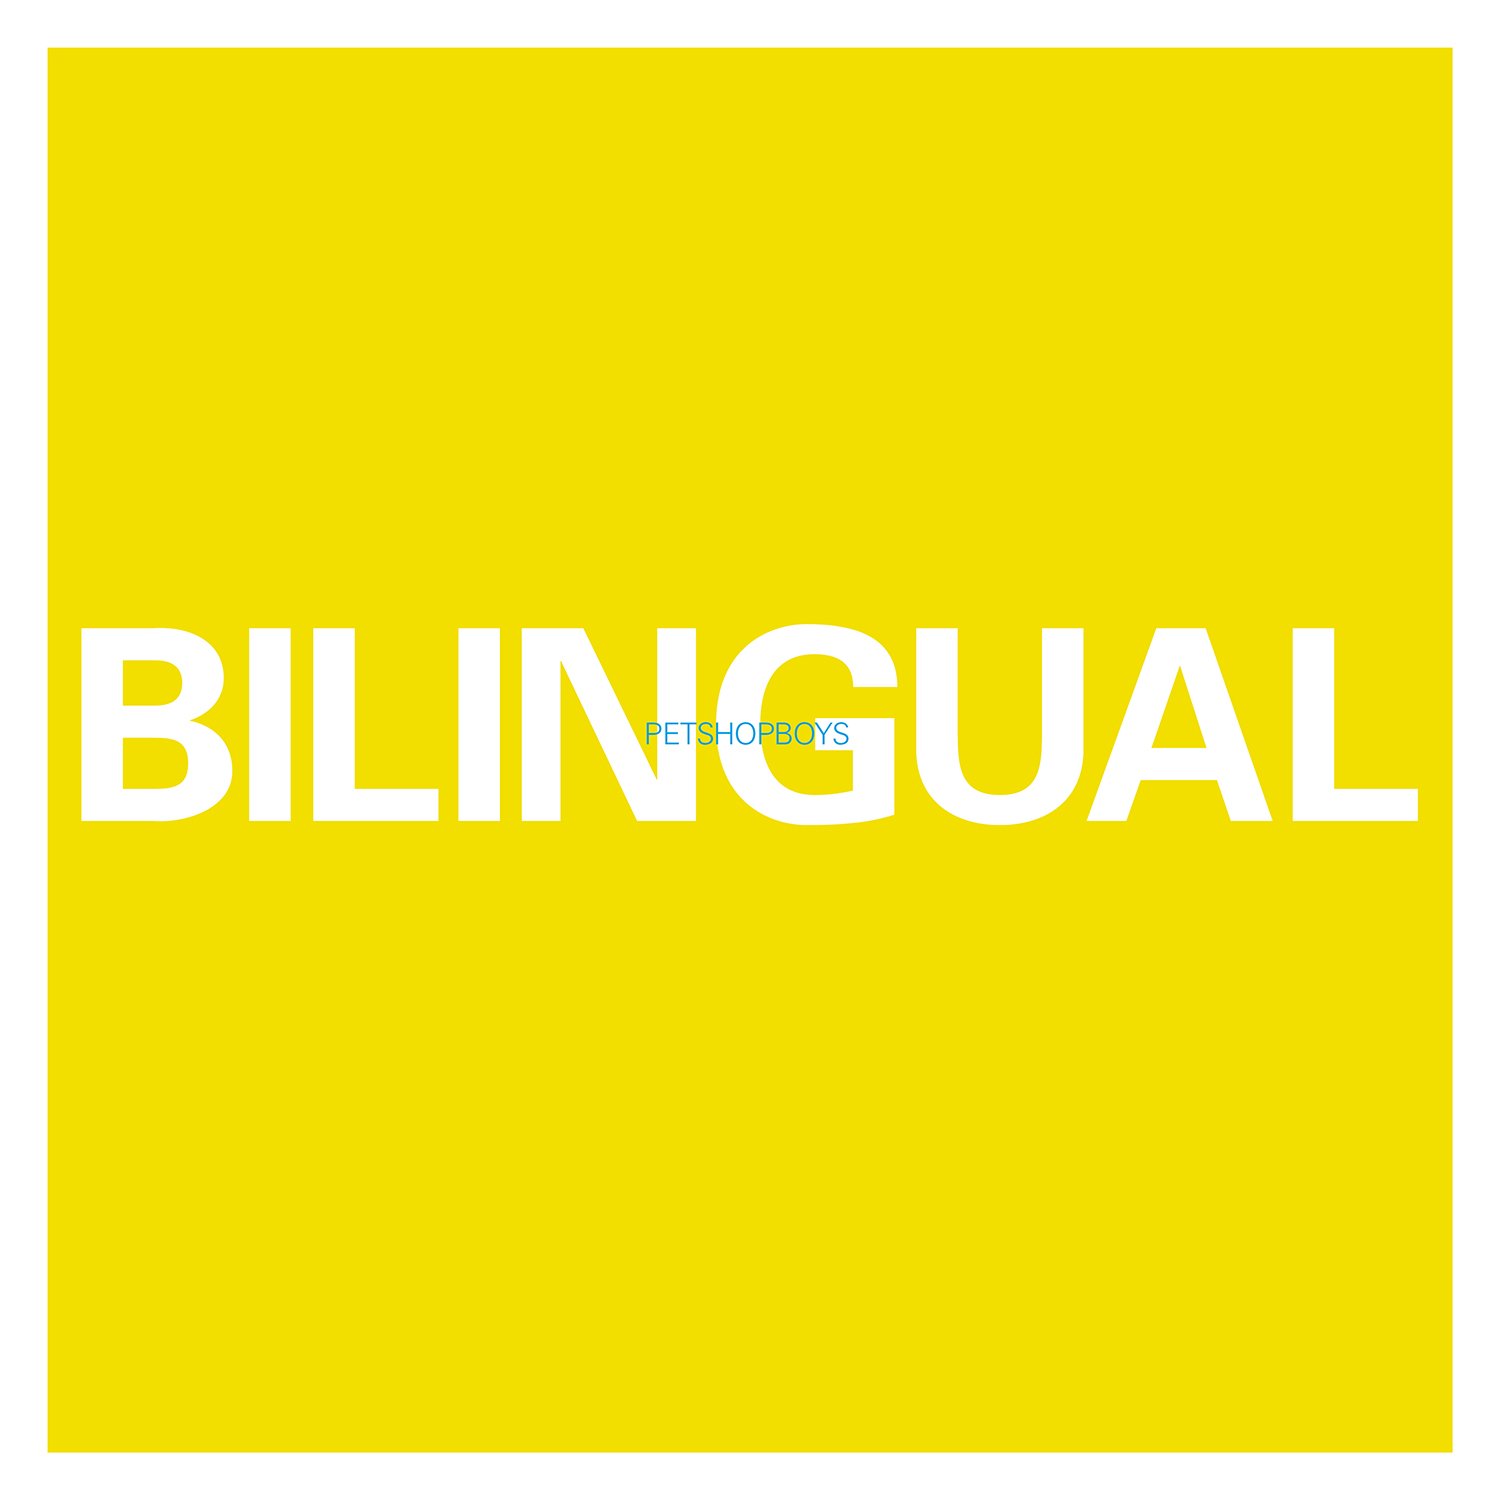 Pet Shop Boys "Bilingual" LP